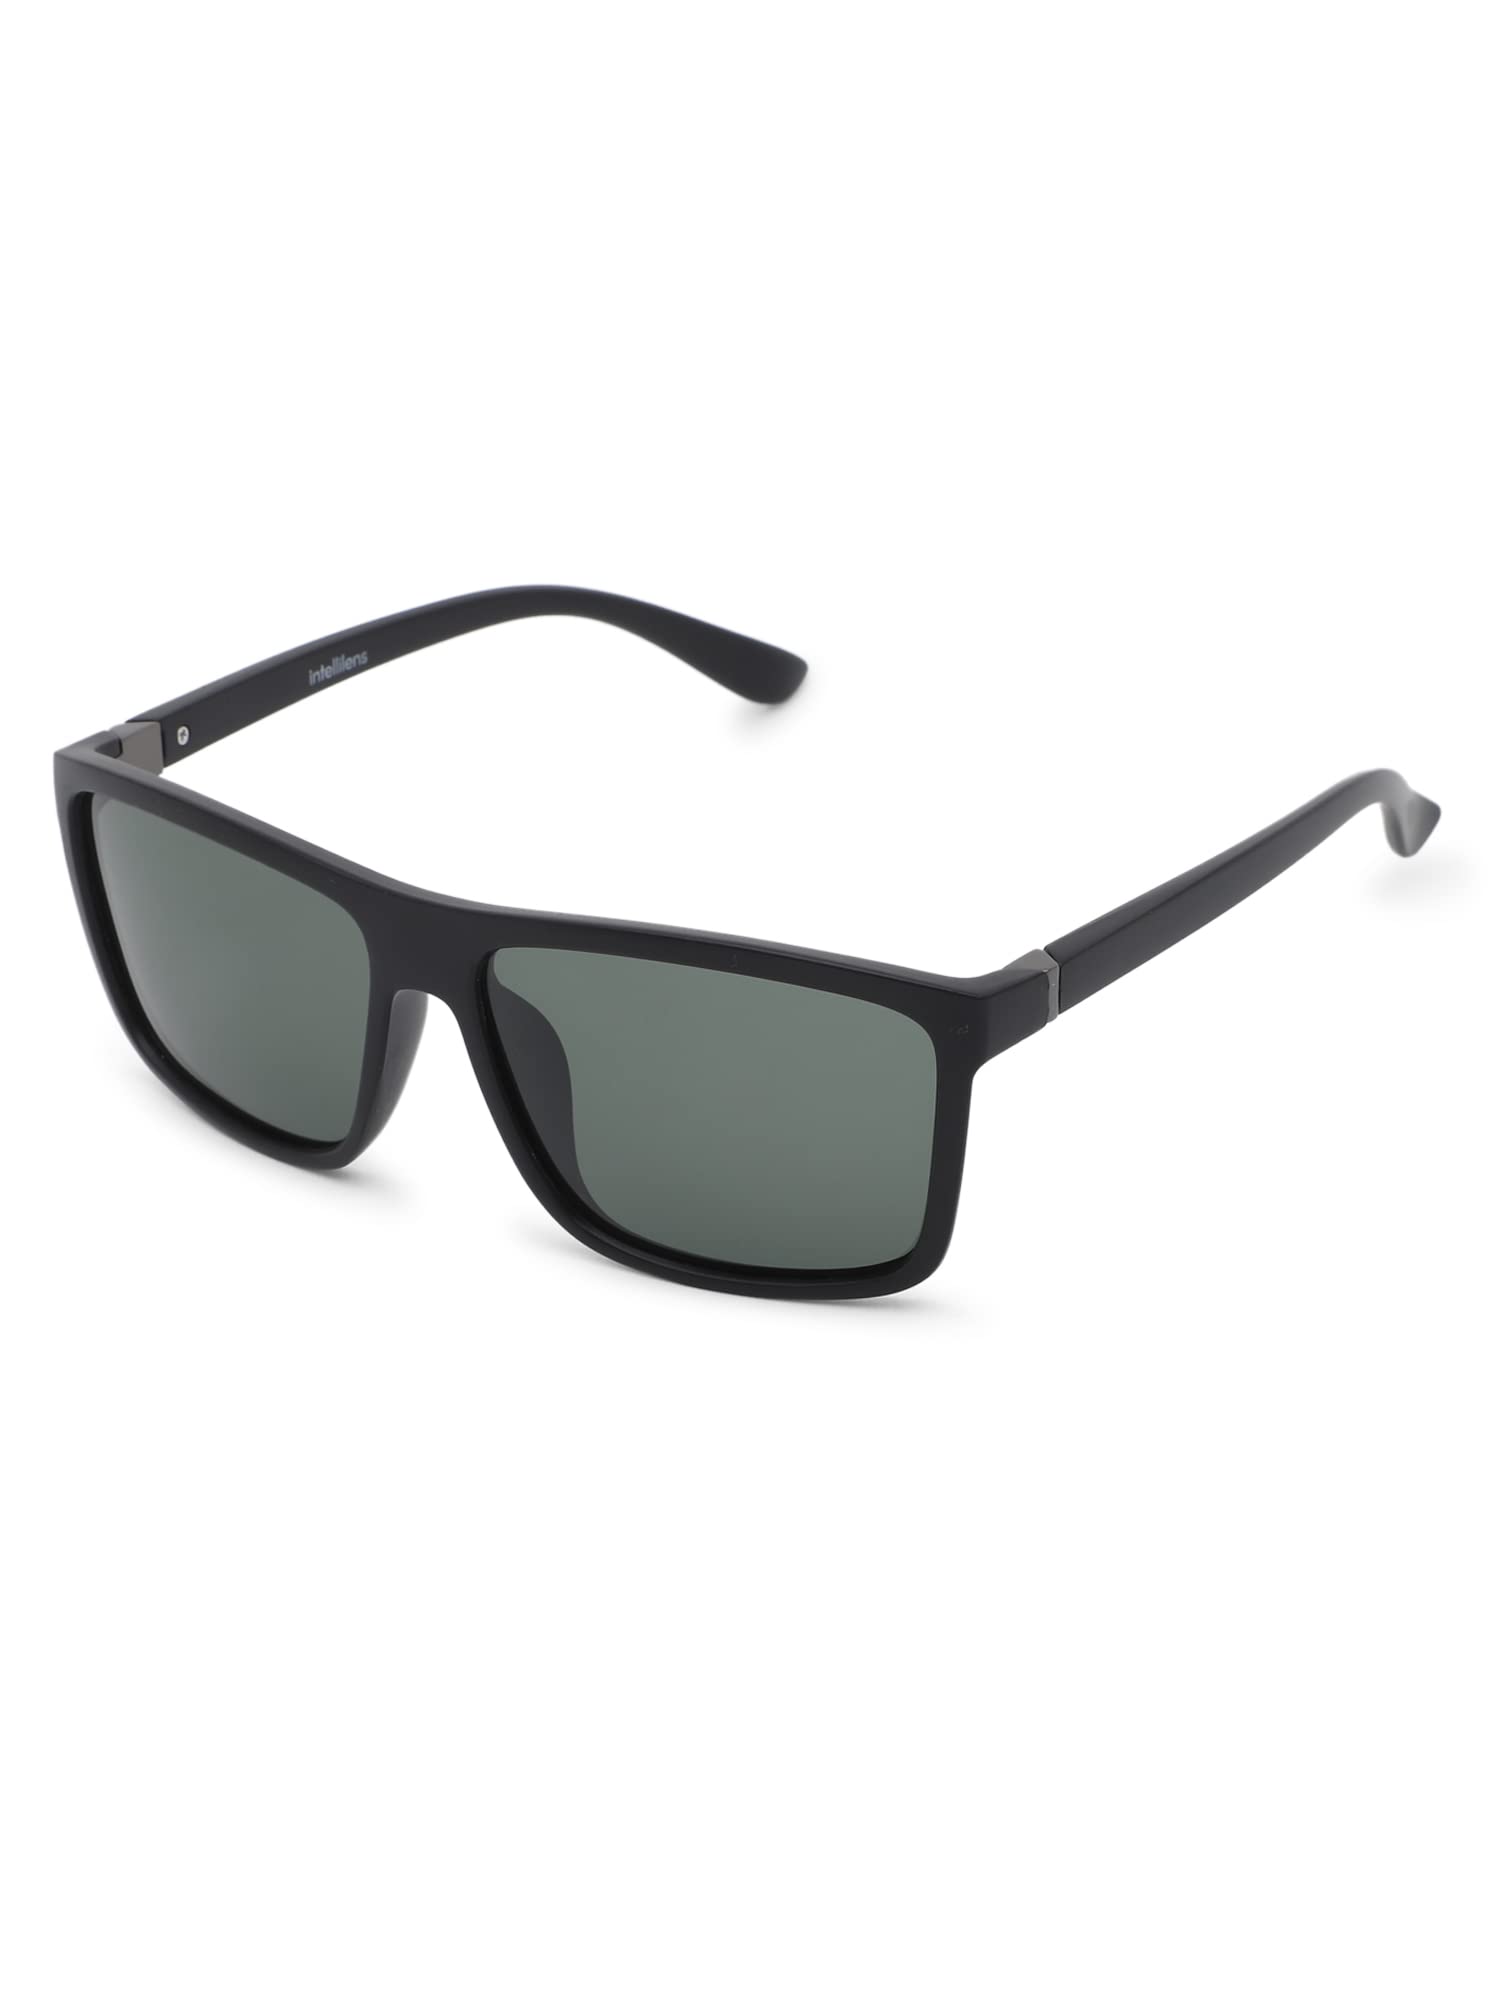 Intellilens Square Polarized & UV Protected Sunglasses For Men & Women –  Intellilens by GlobalBees